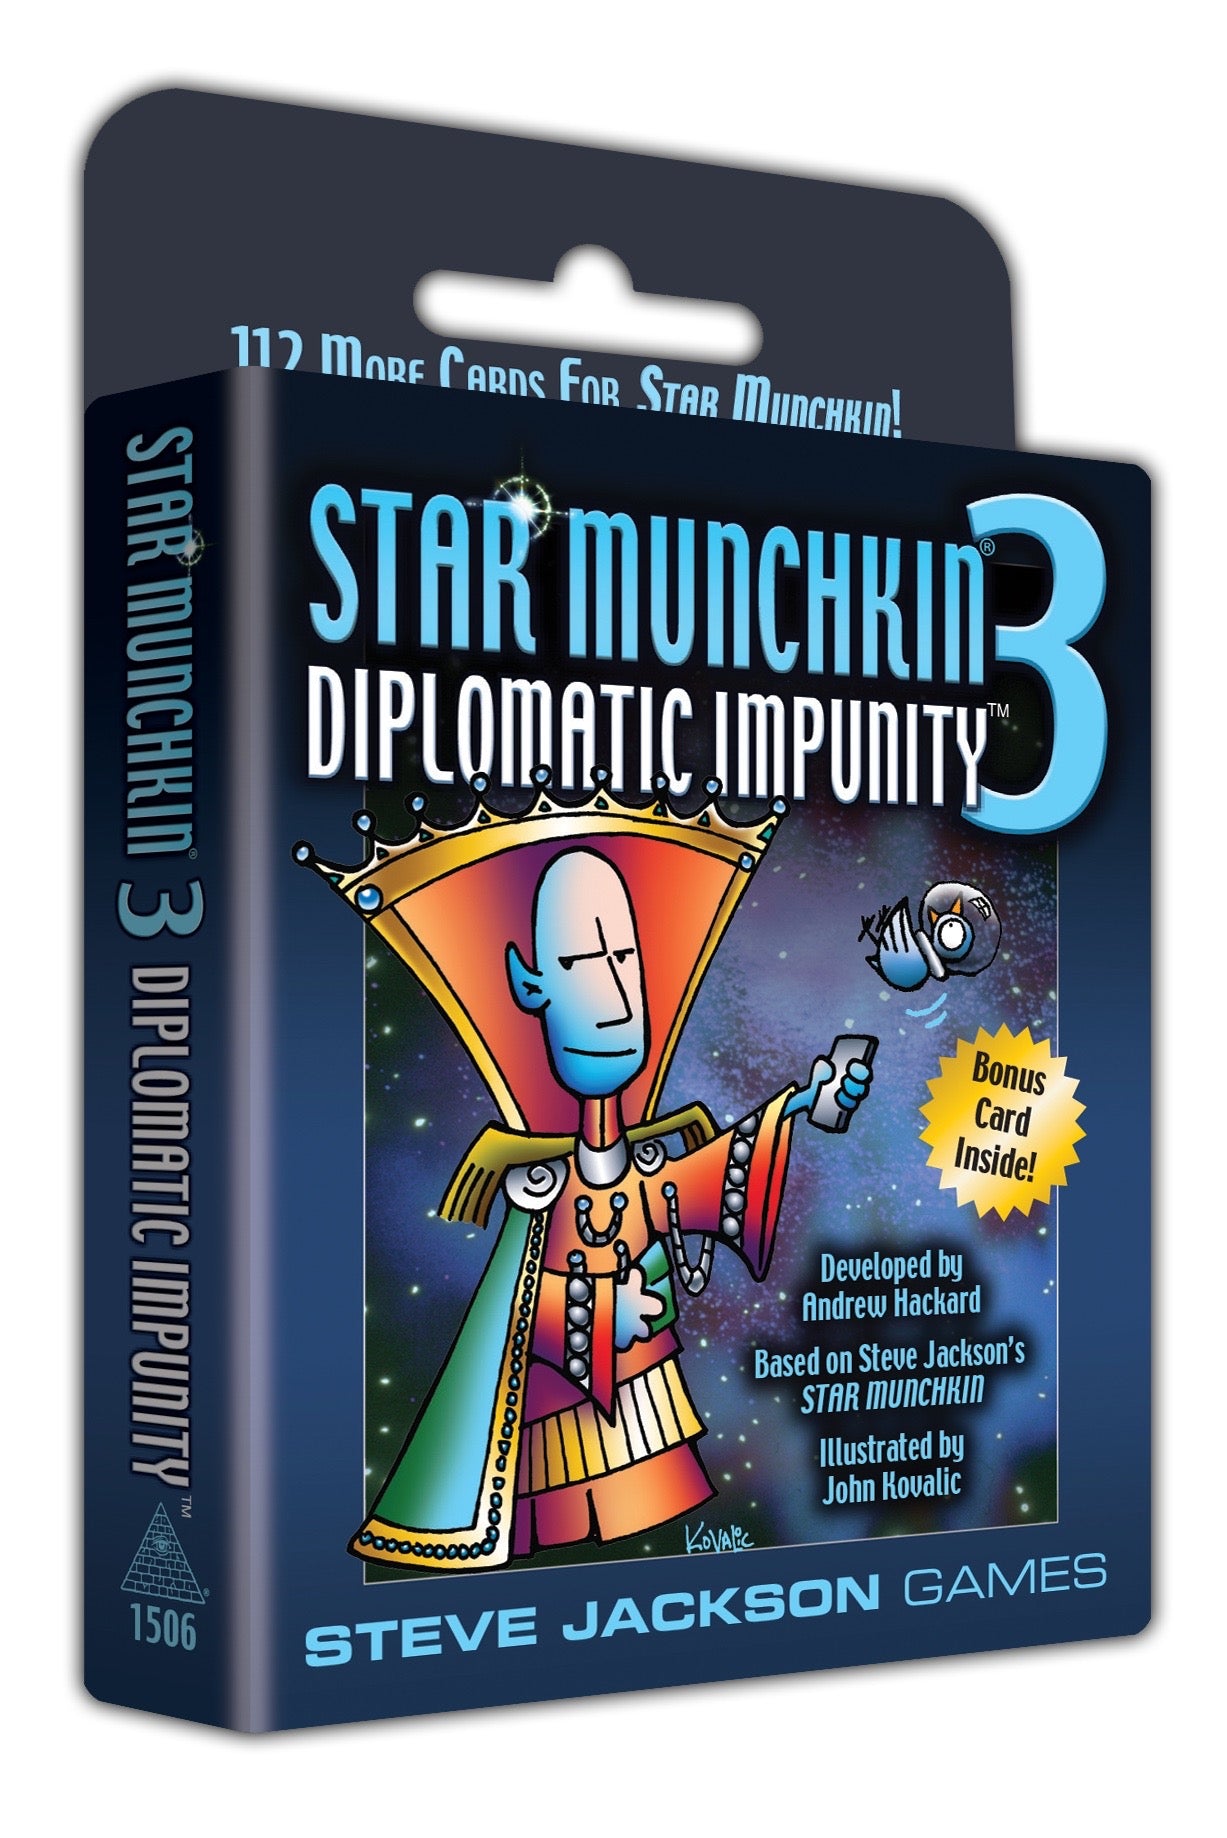 Star Munchkin 3 - Diplomatic Impunity